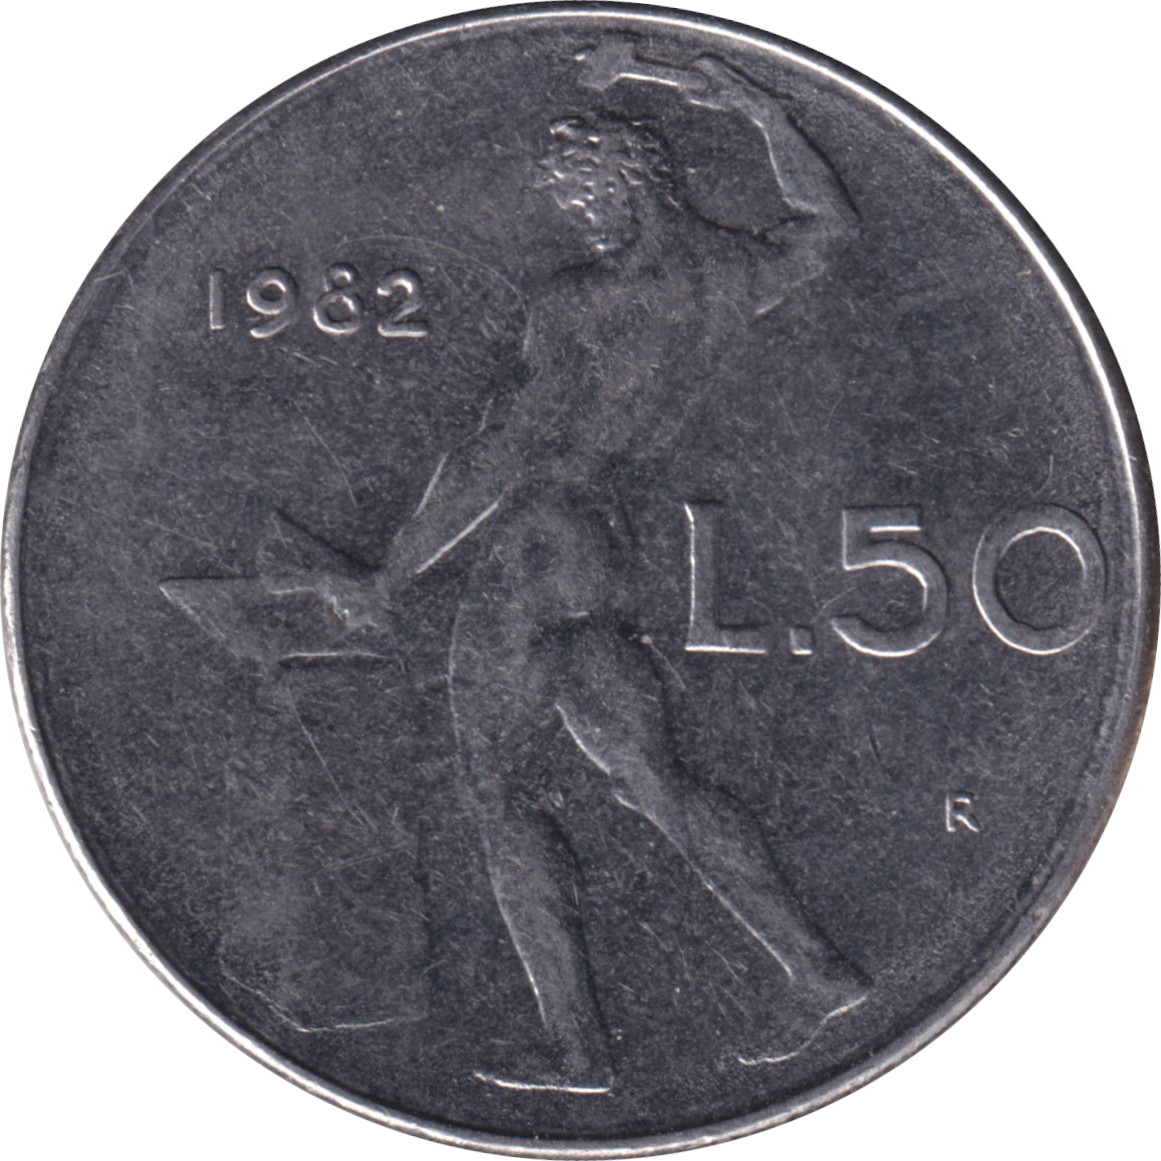 50 lire - Forgeron - Lourde